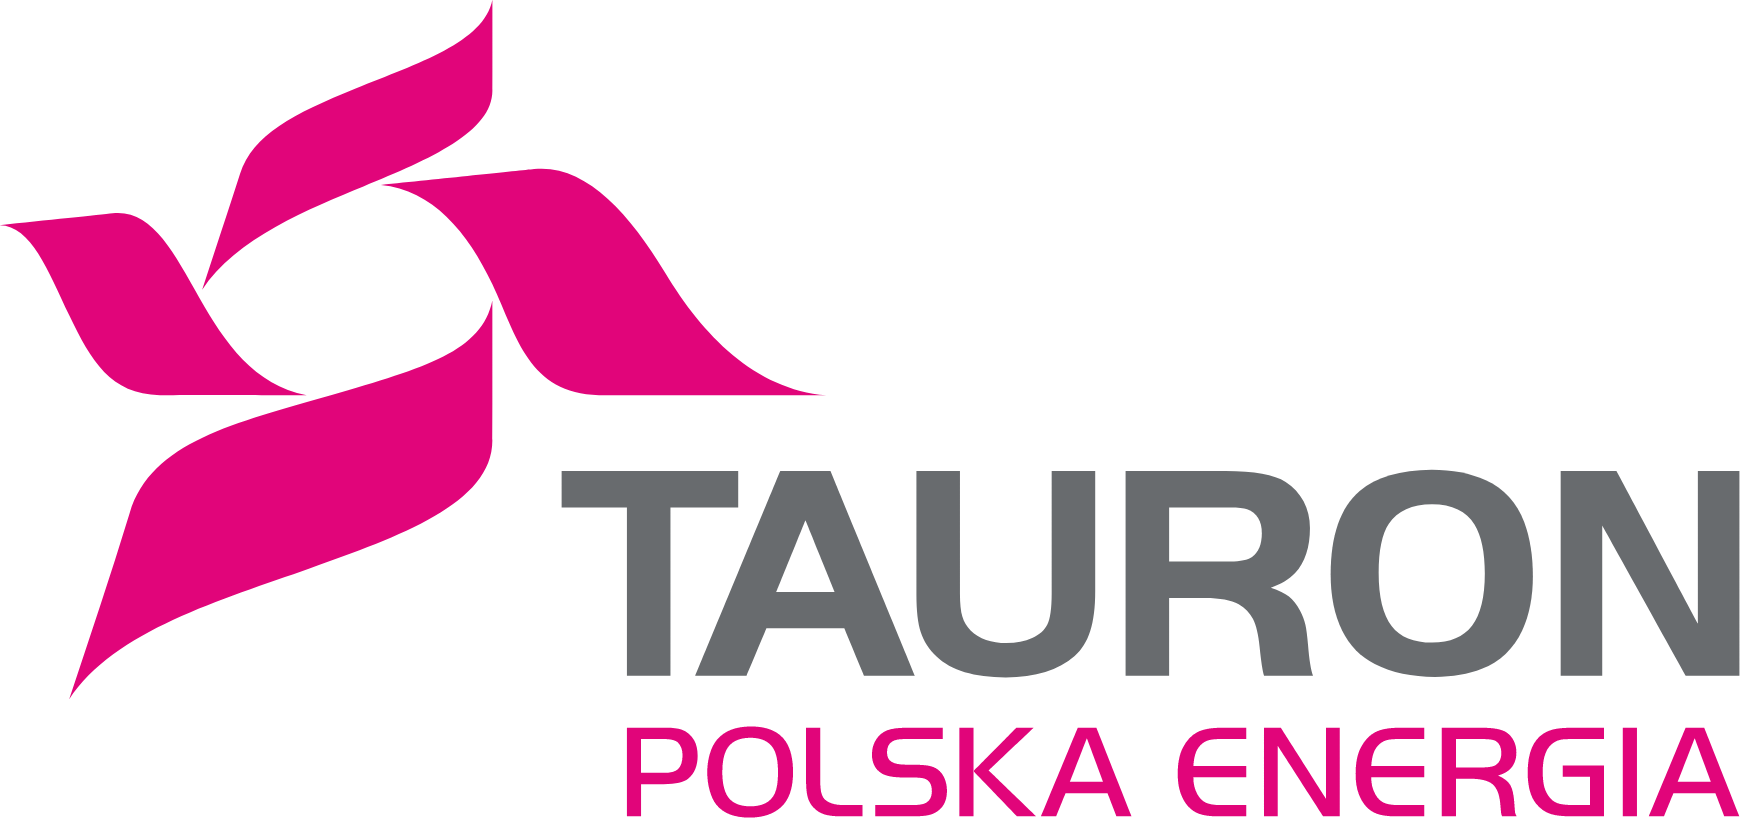 Tauron Polska logo large (transparent PNG)